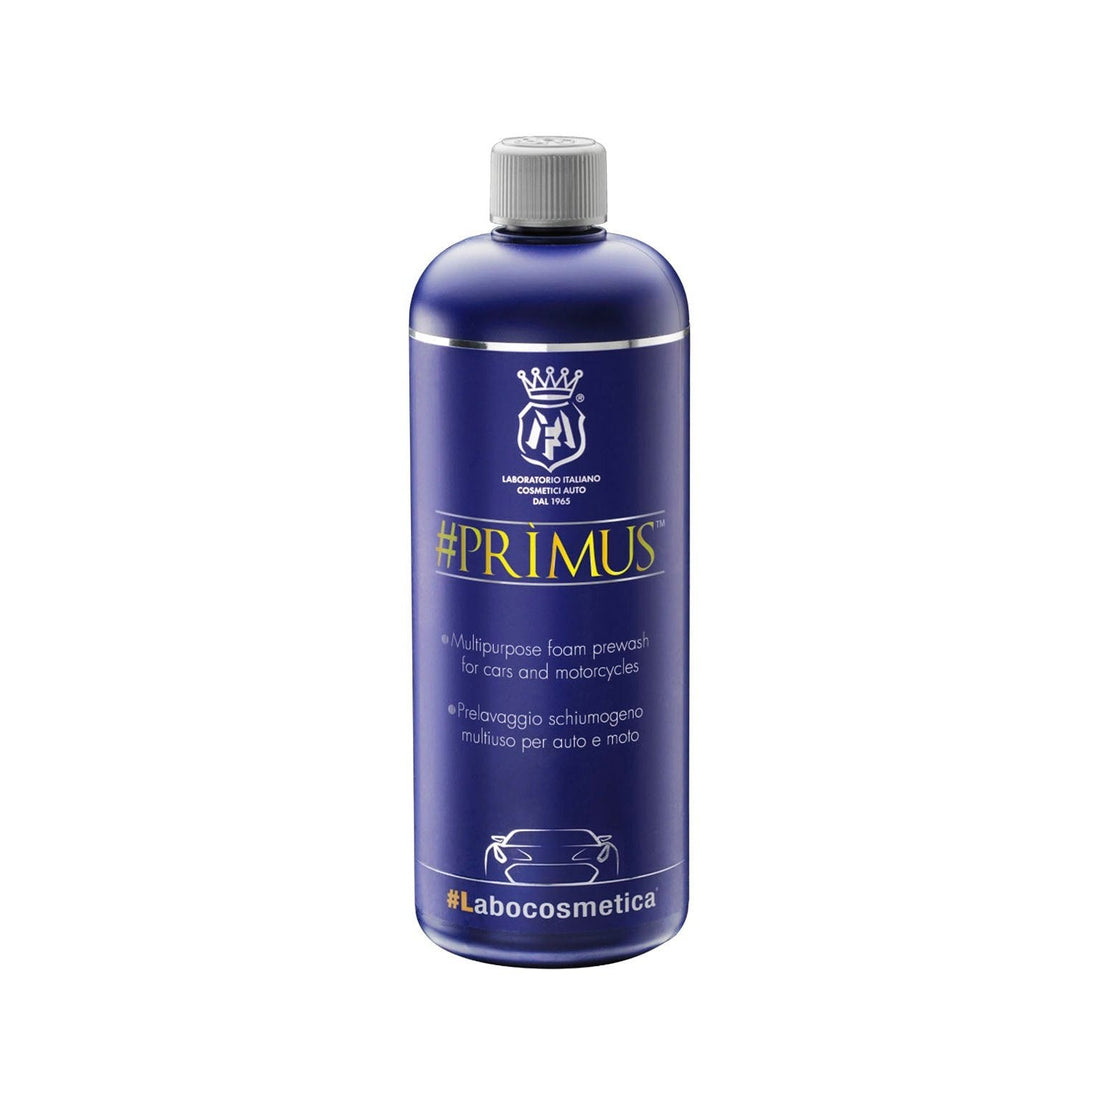 Labocosmetica - #Primus Foam Prewash 1000ML - Detailaddicts